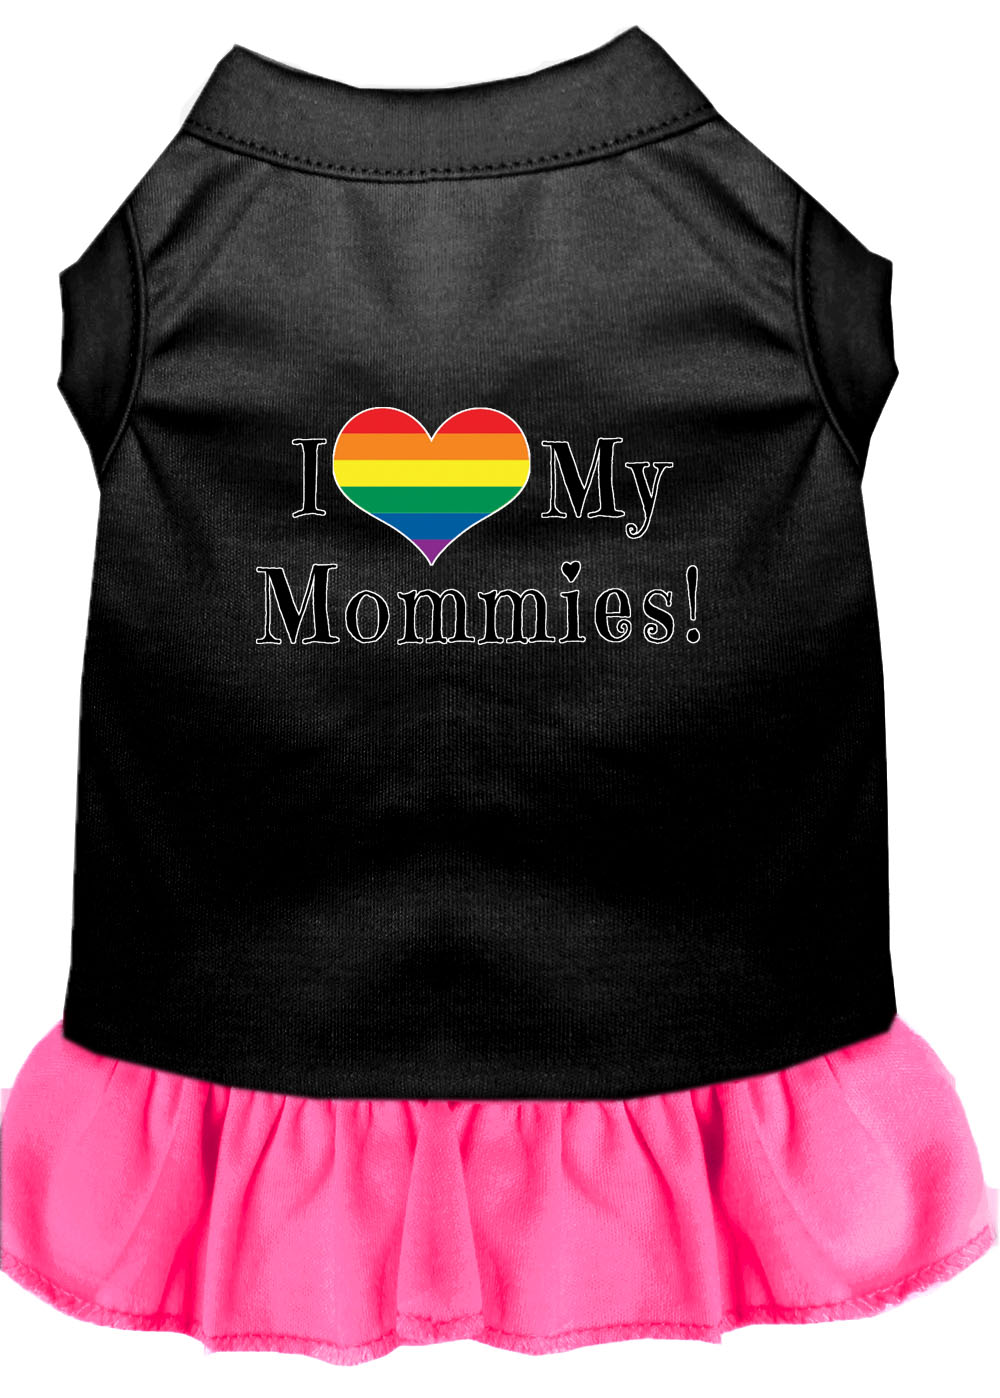 I Heart my Mommies Screen Print Dog Dress Black with Bright Pink XXXL